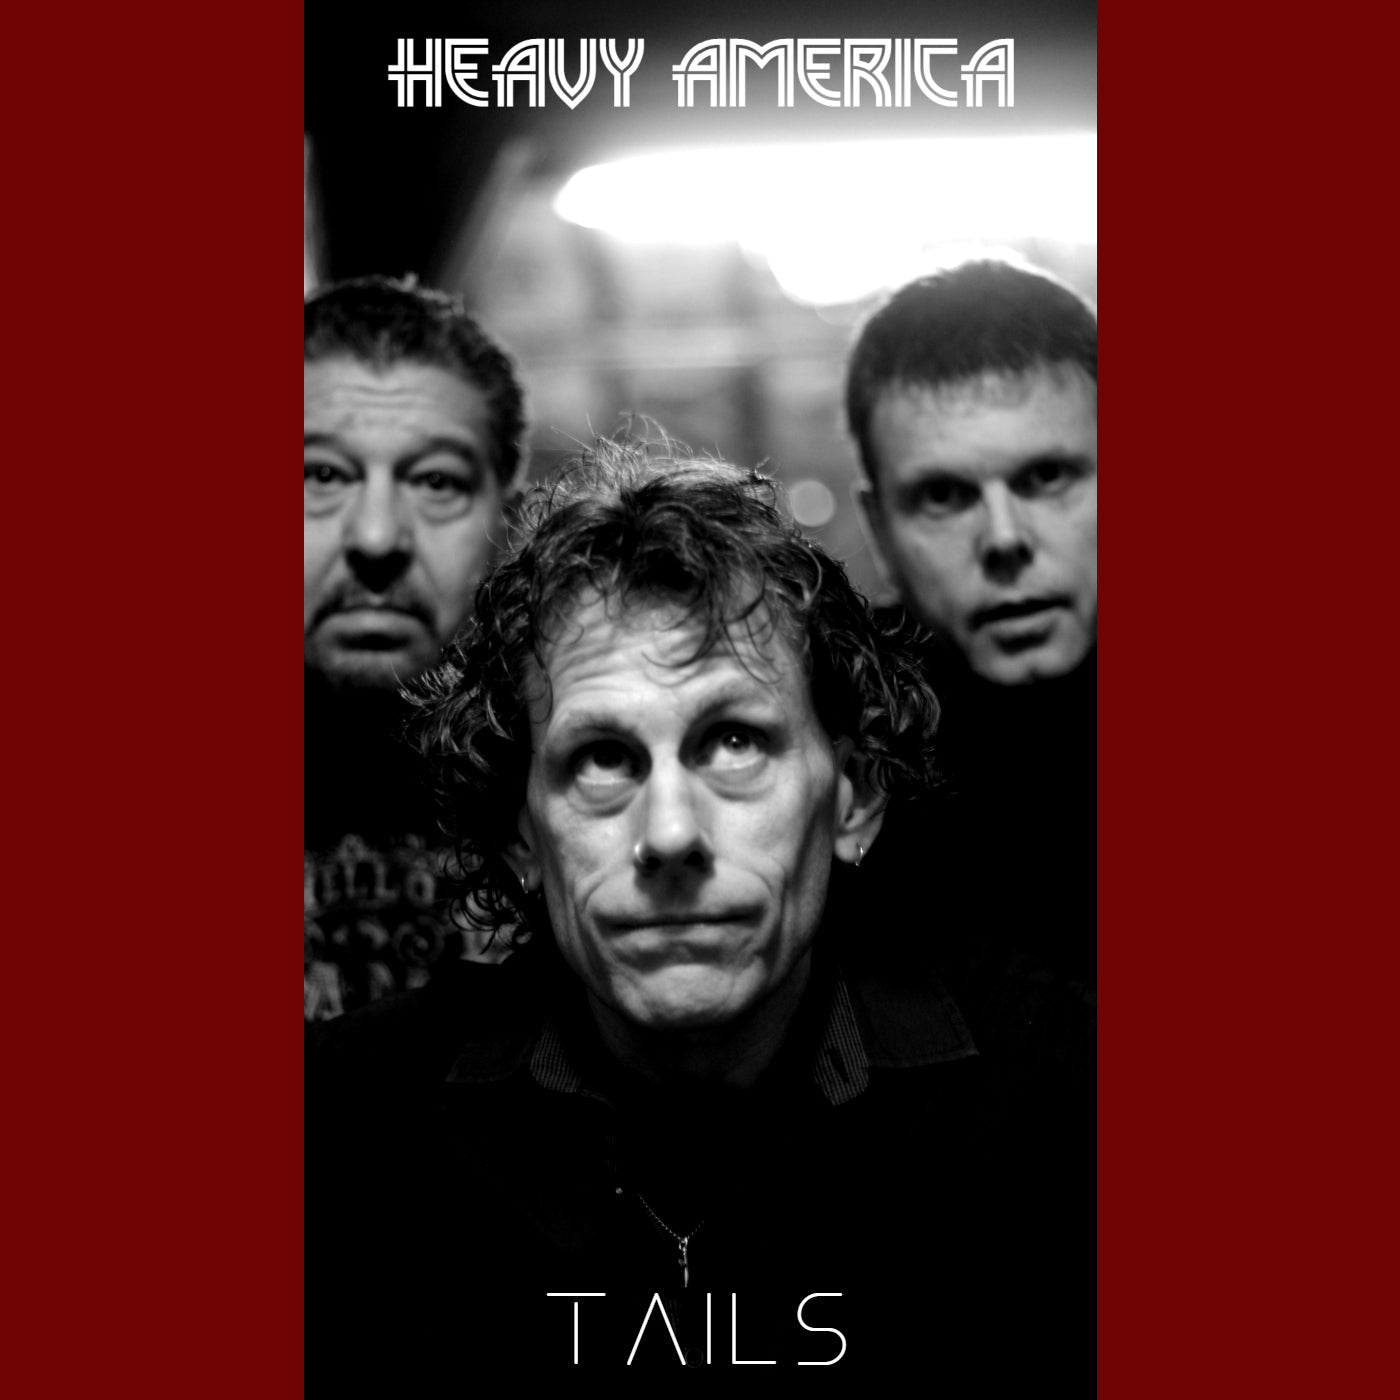 Heavy AmericA – ‘Tails’